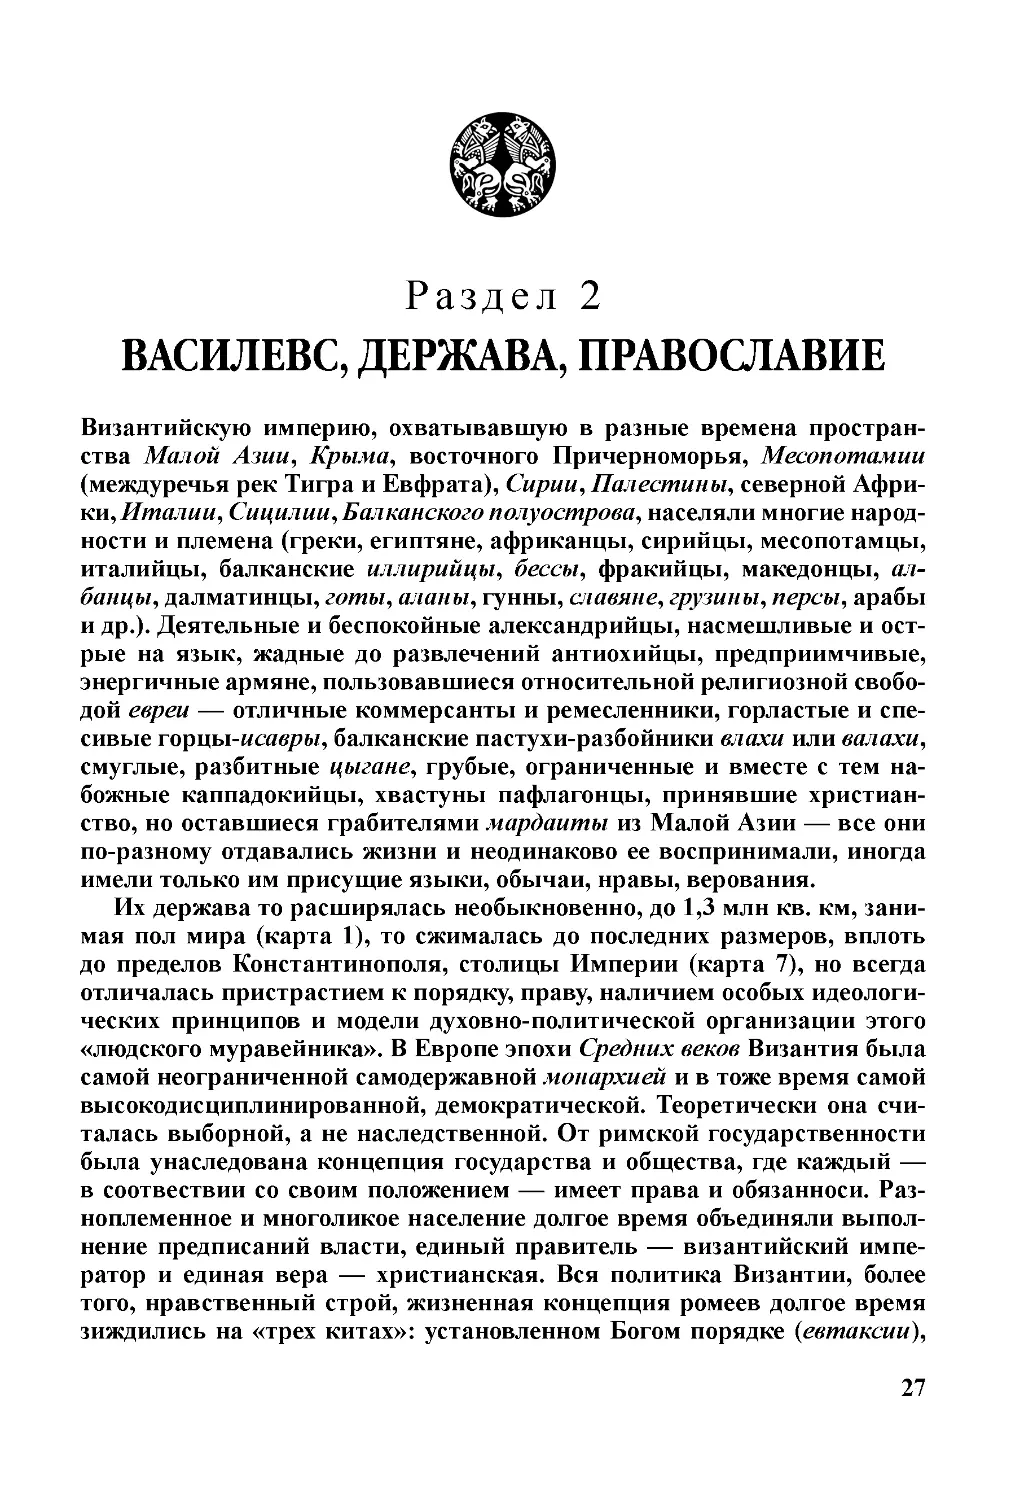 Раздел 2. Василевс, держава, православие